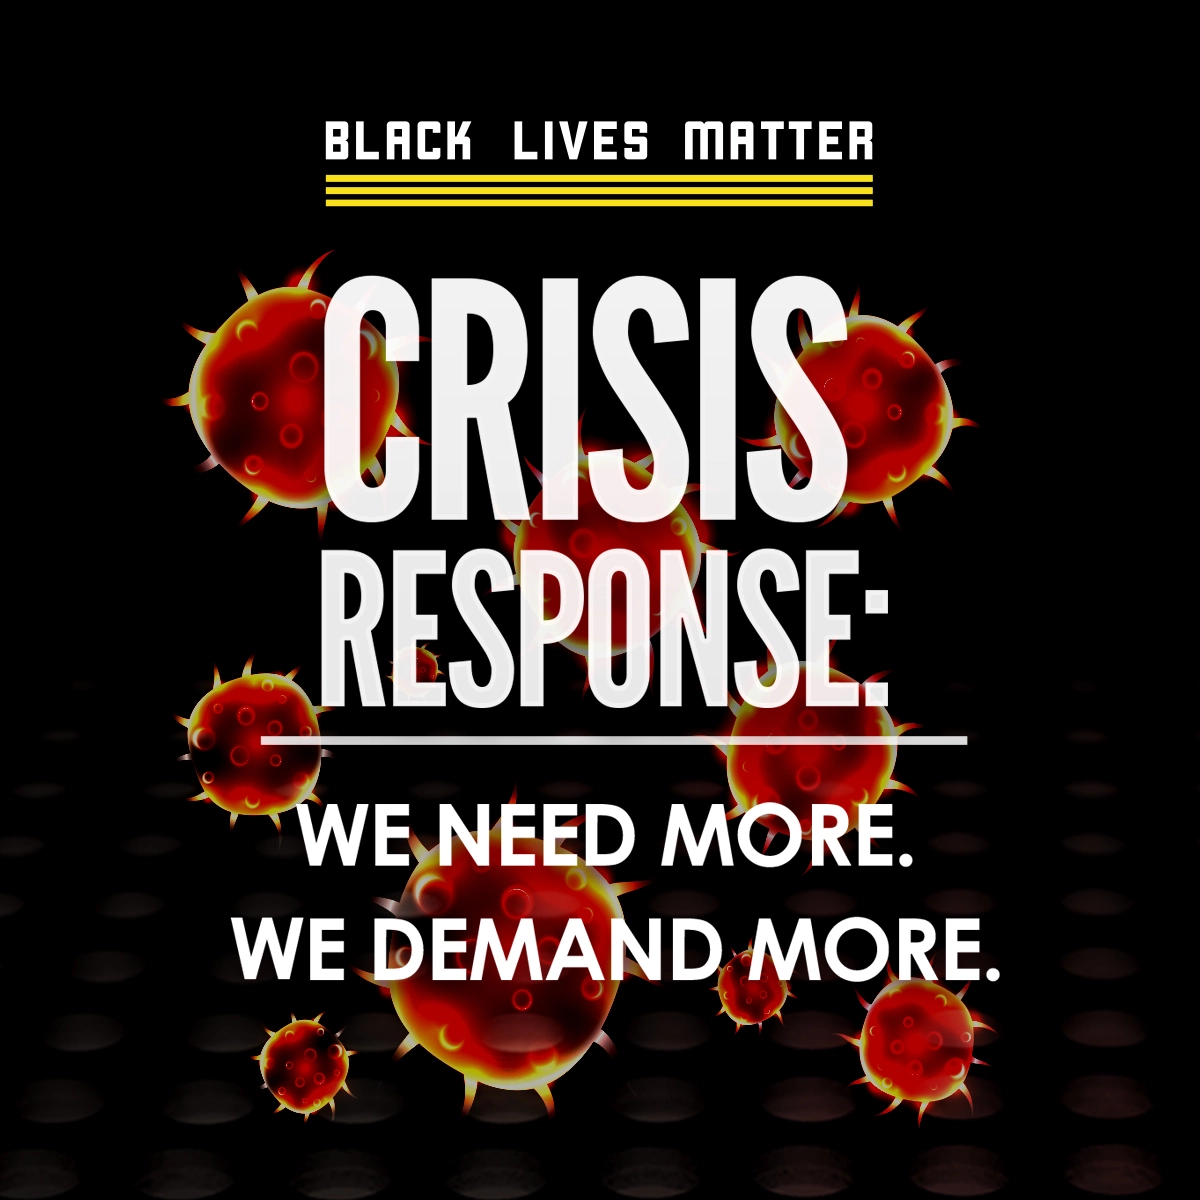 blm-crisis-response